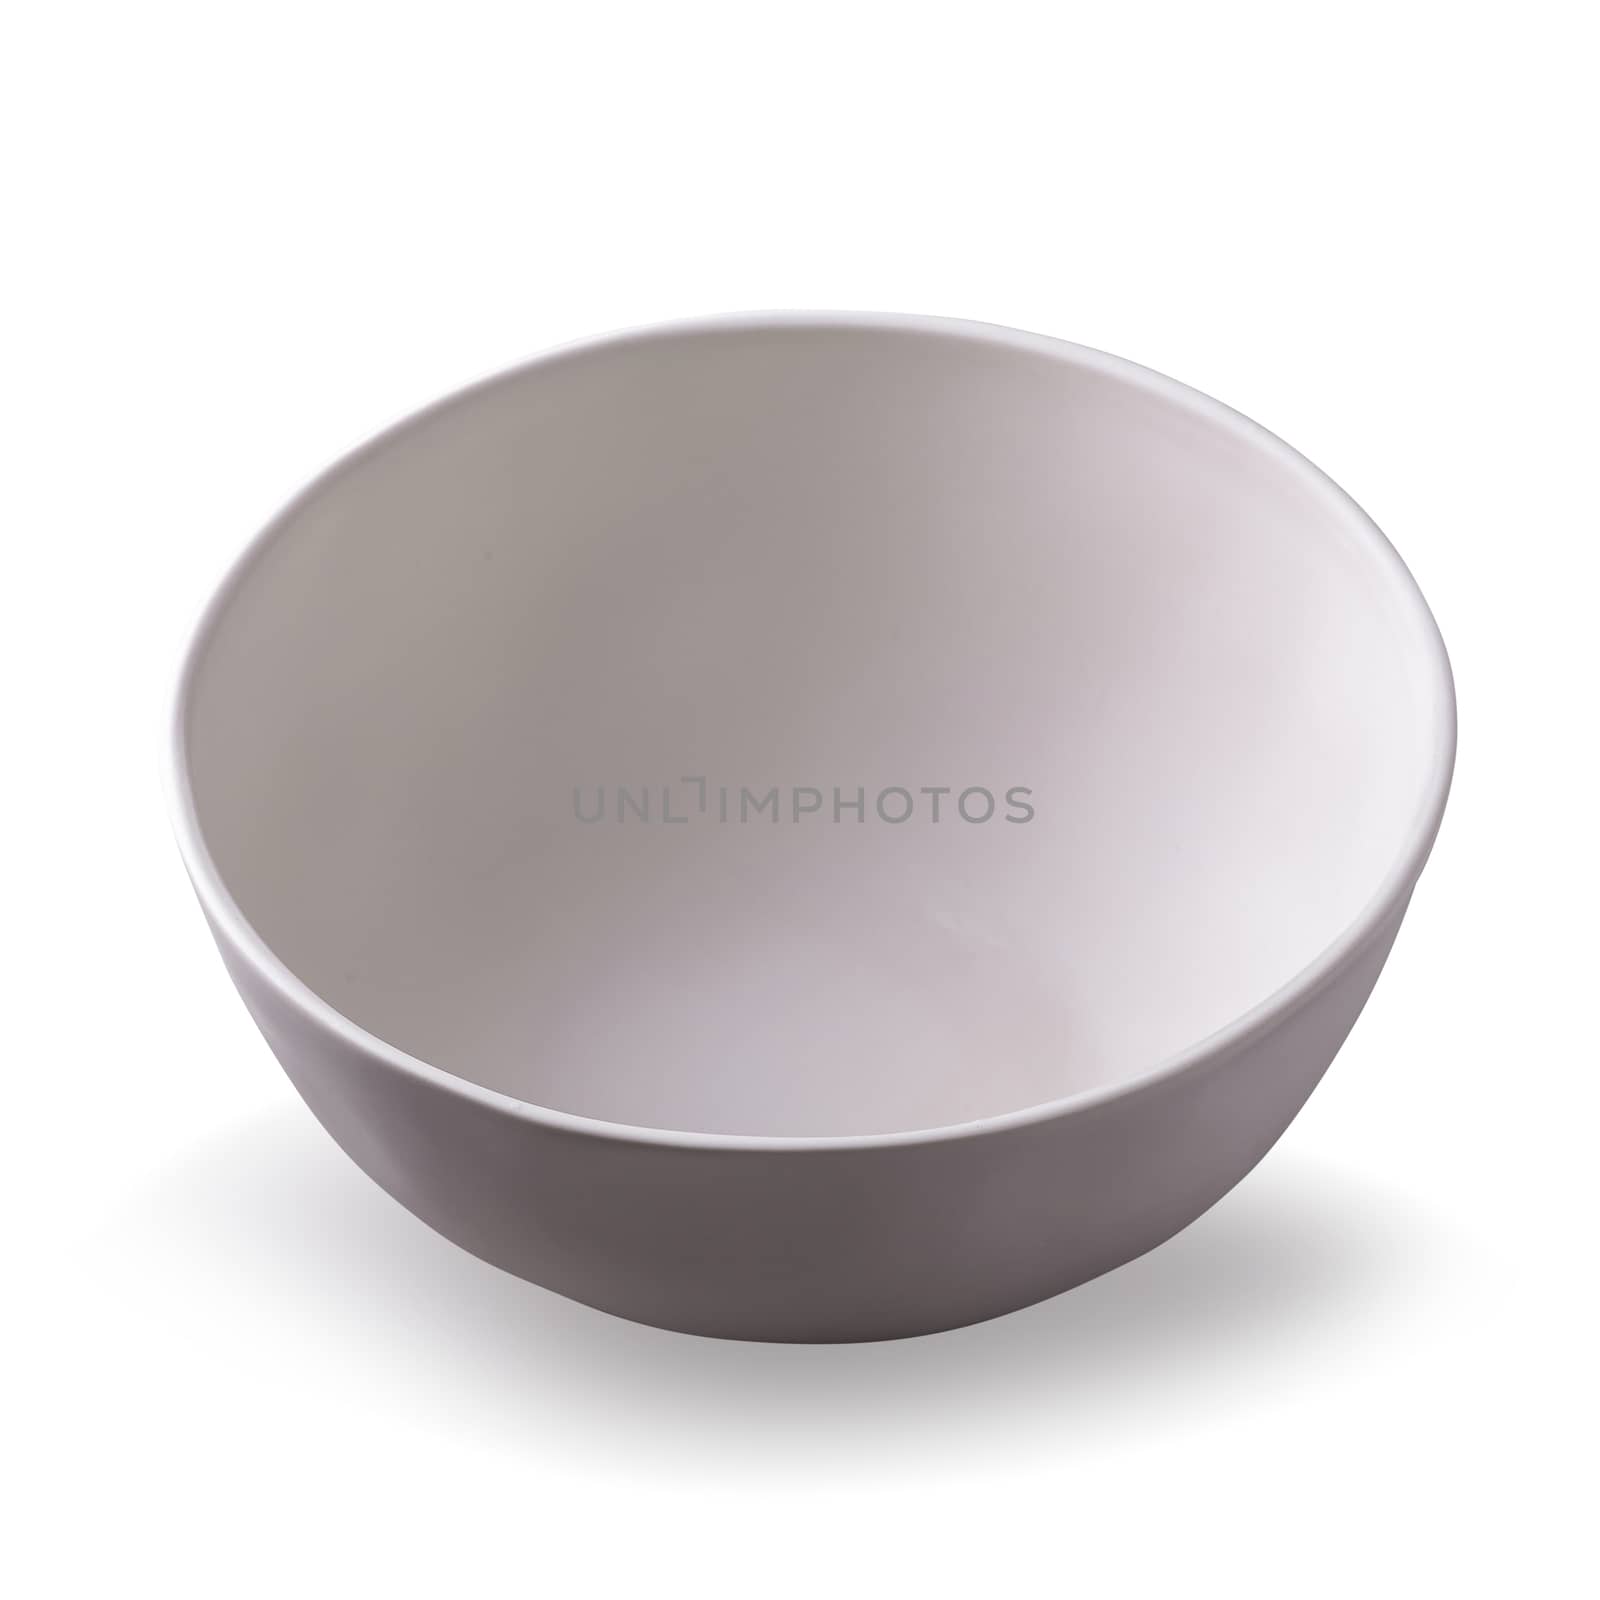 Empty blank white ceramic Bowl isolated on white background by kaiskynet